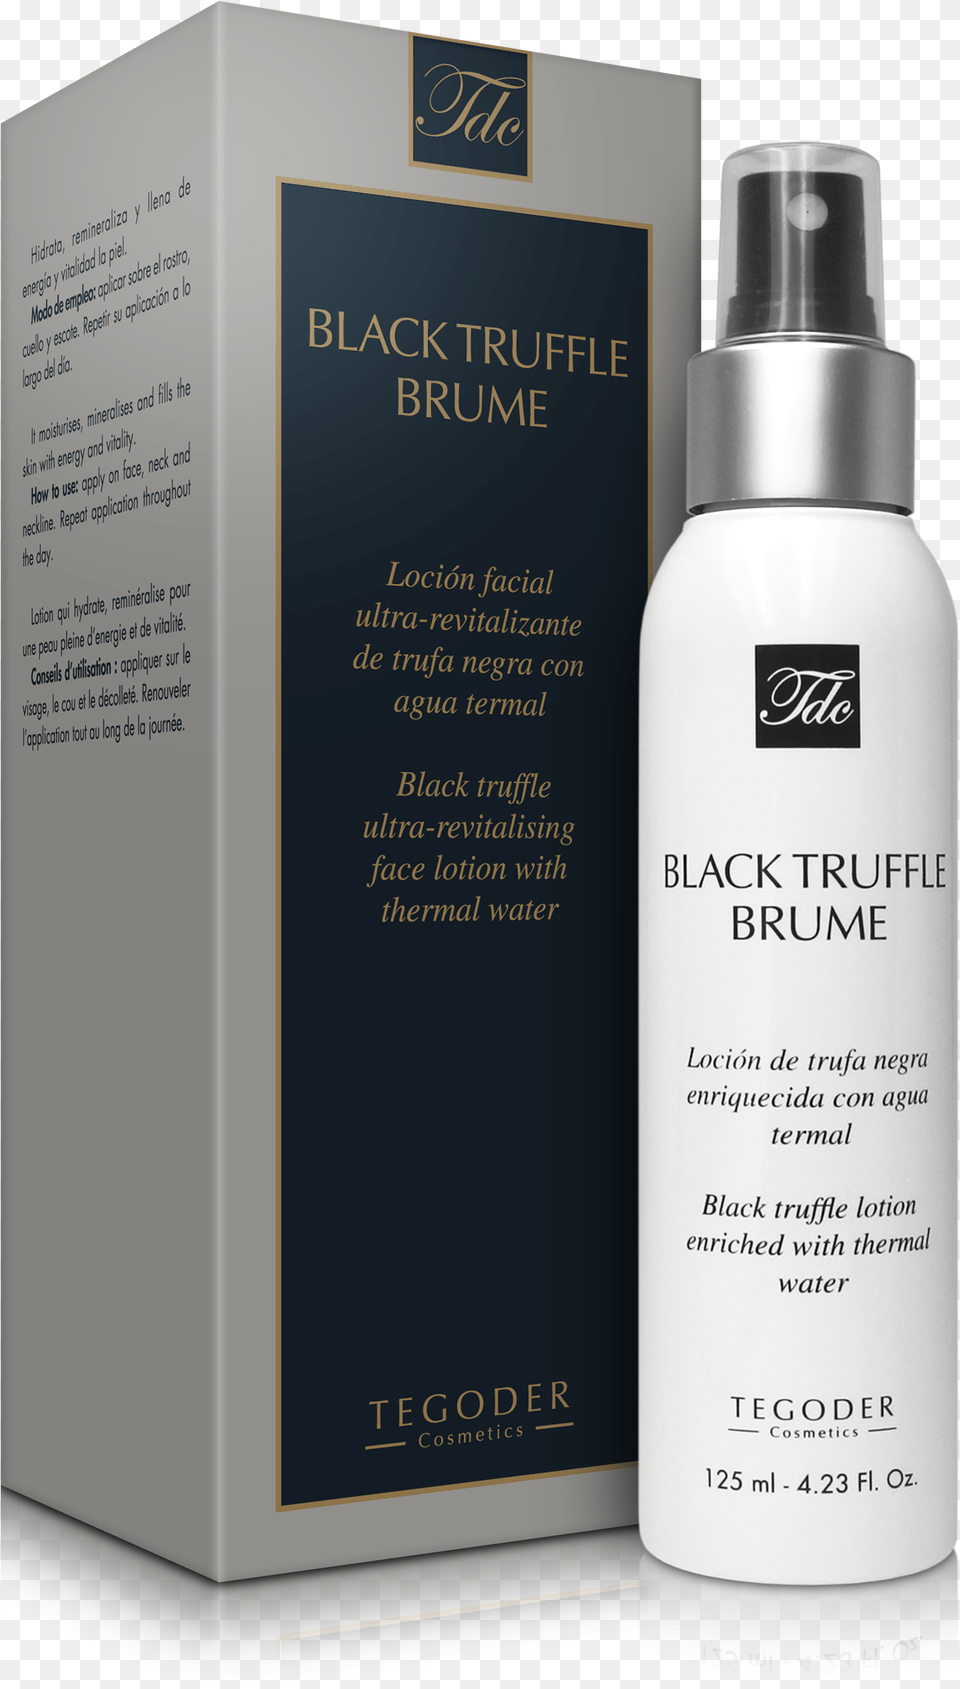 Tegoder Black Truffle Brume, Bottle, Lotion, Cosmetics, Perfume Free Transparent Png